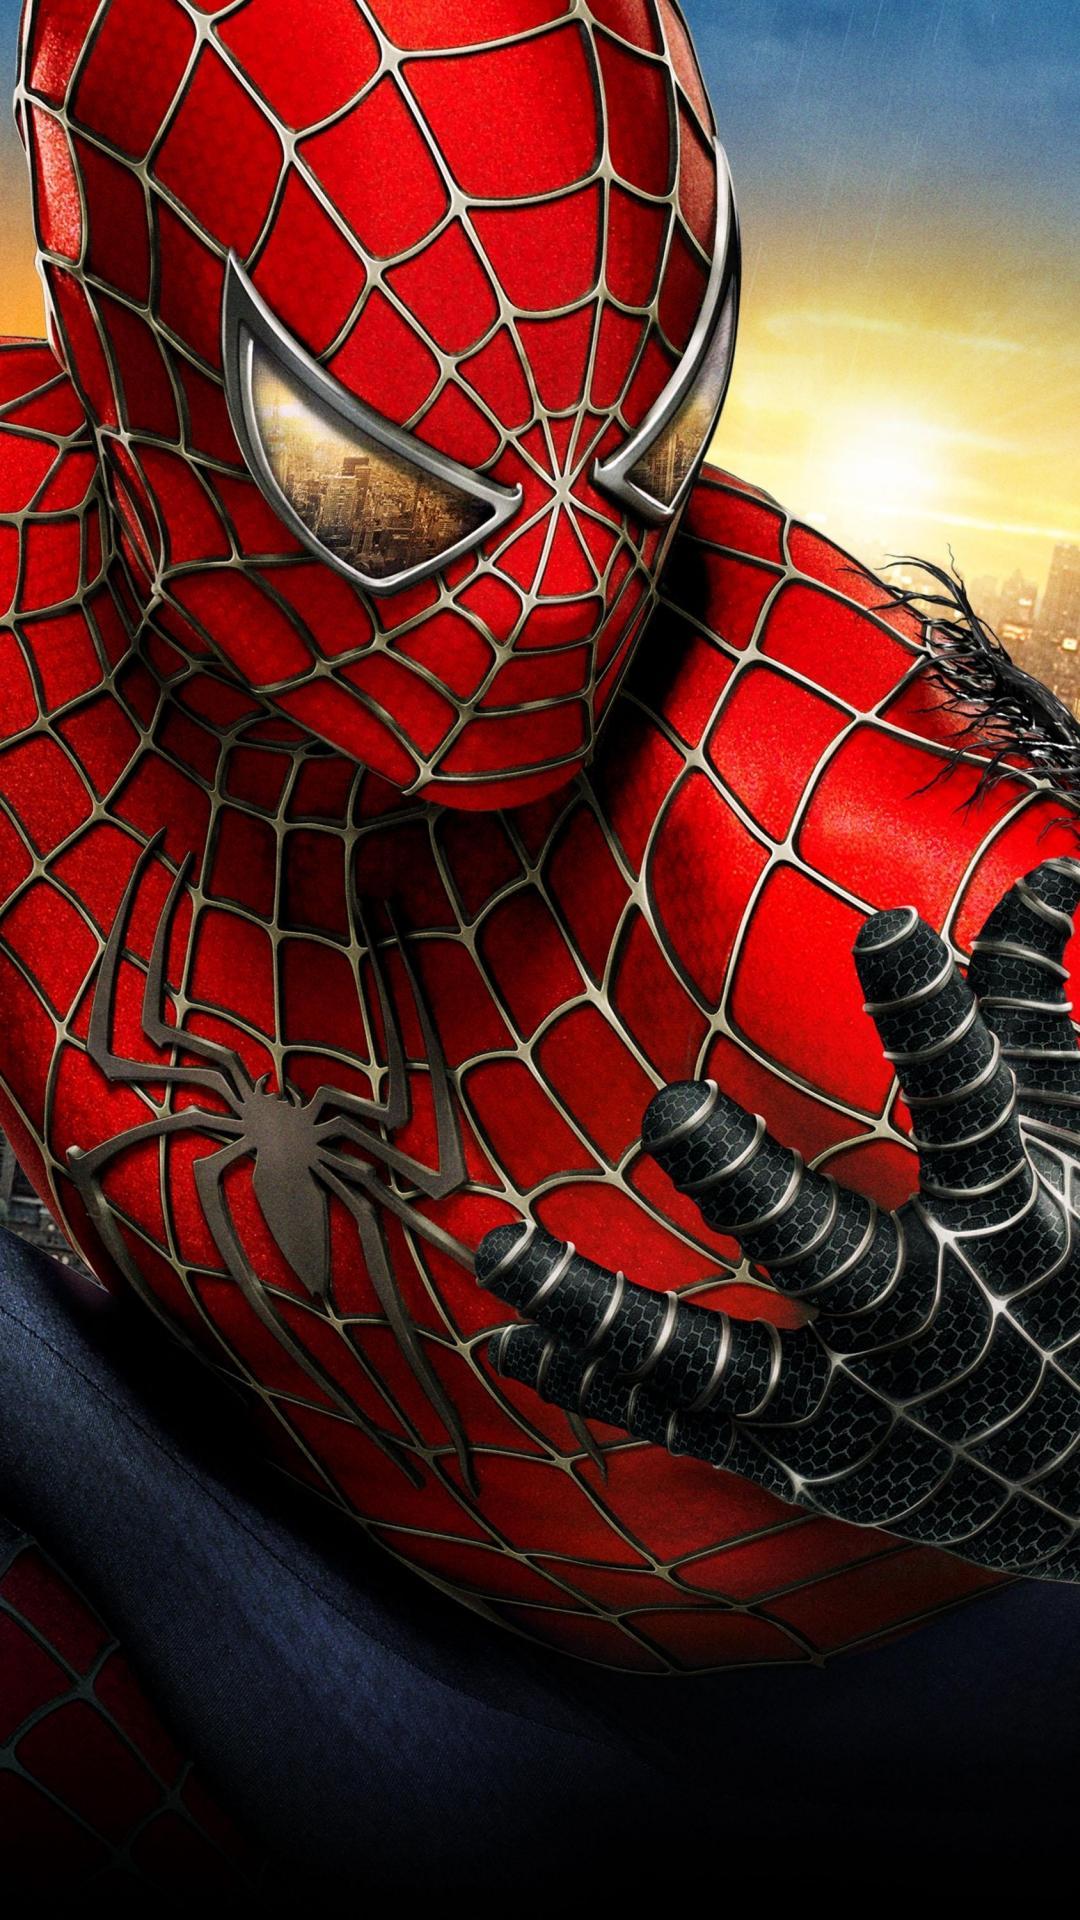 Spiderman spiderman 3 comics movies superheroes wallpaper